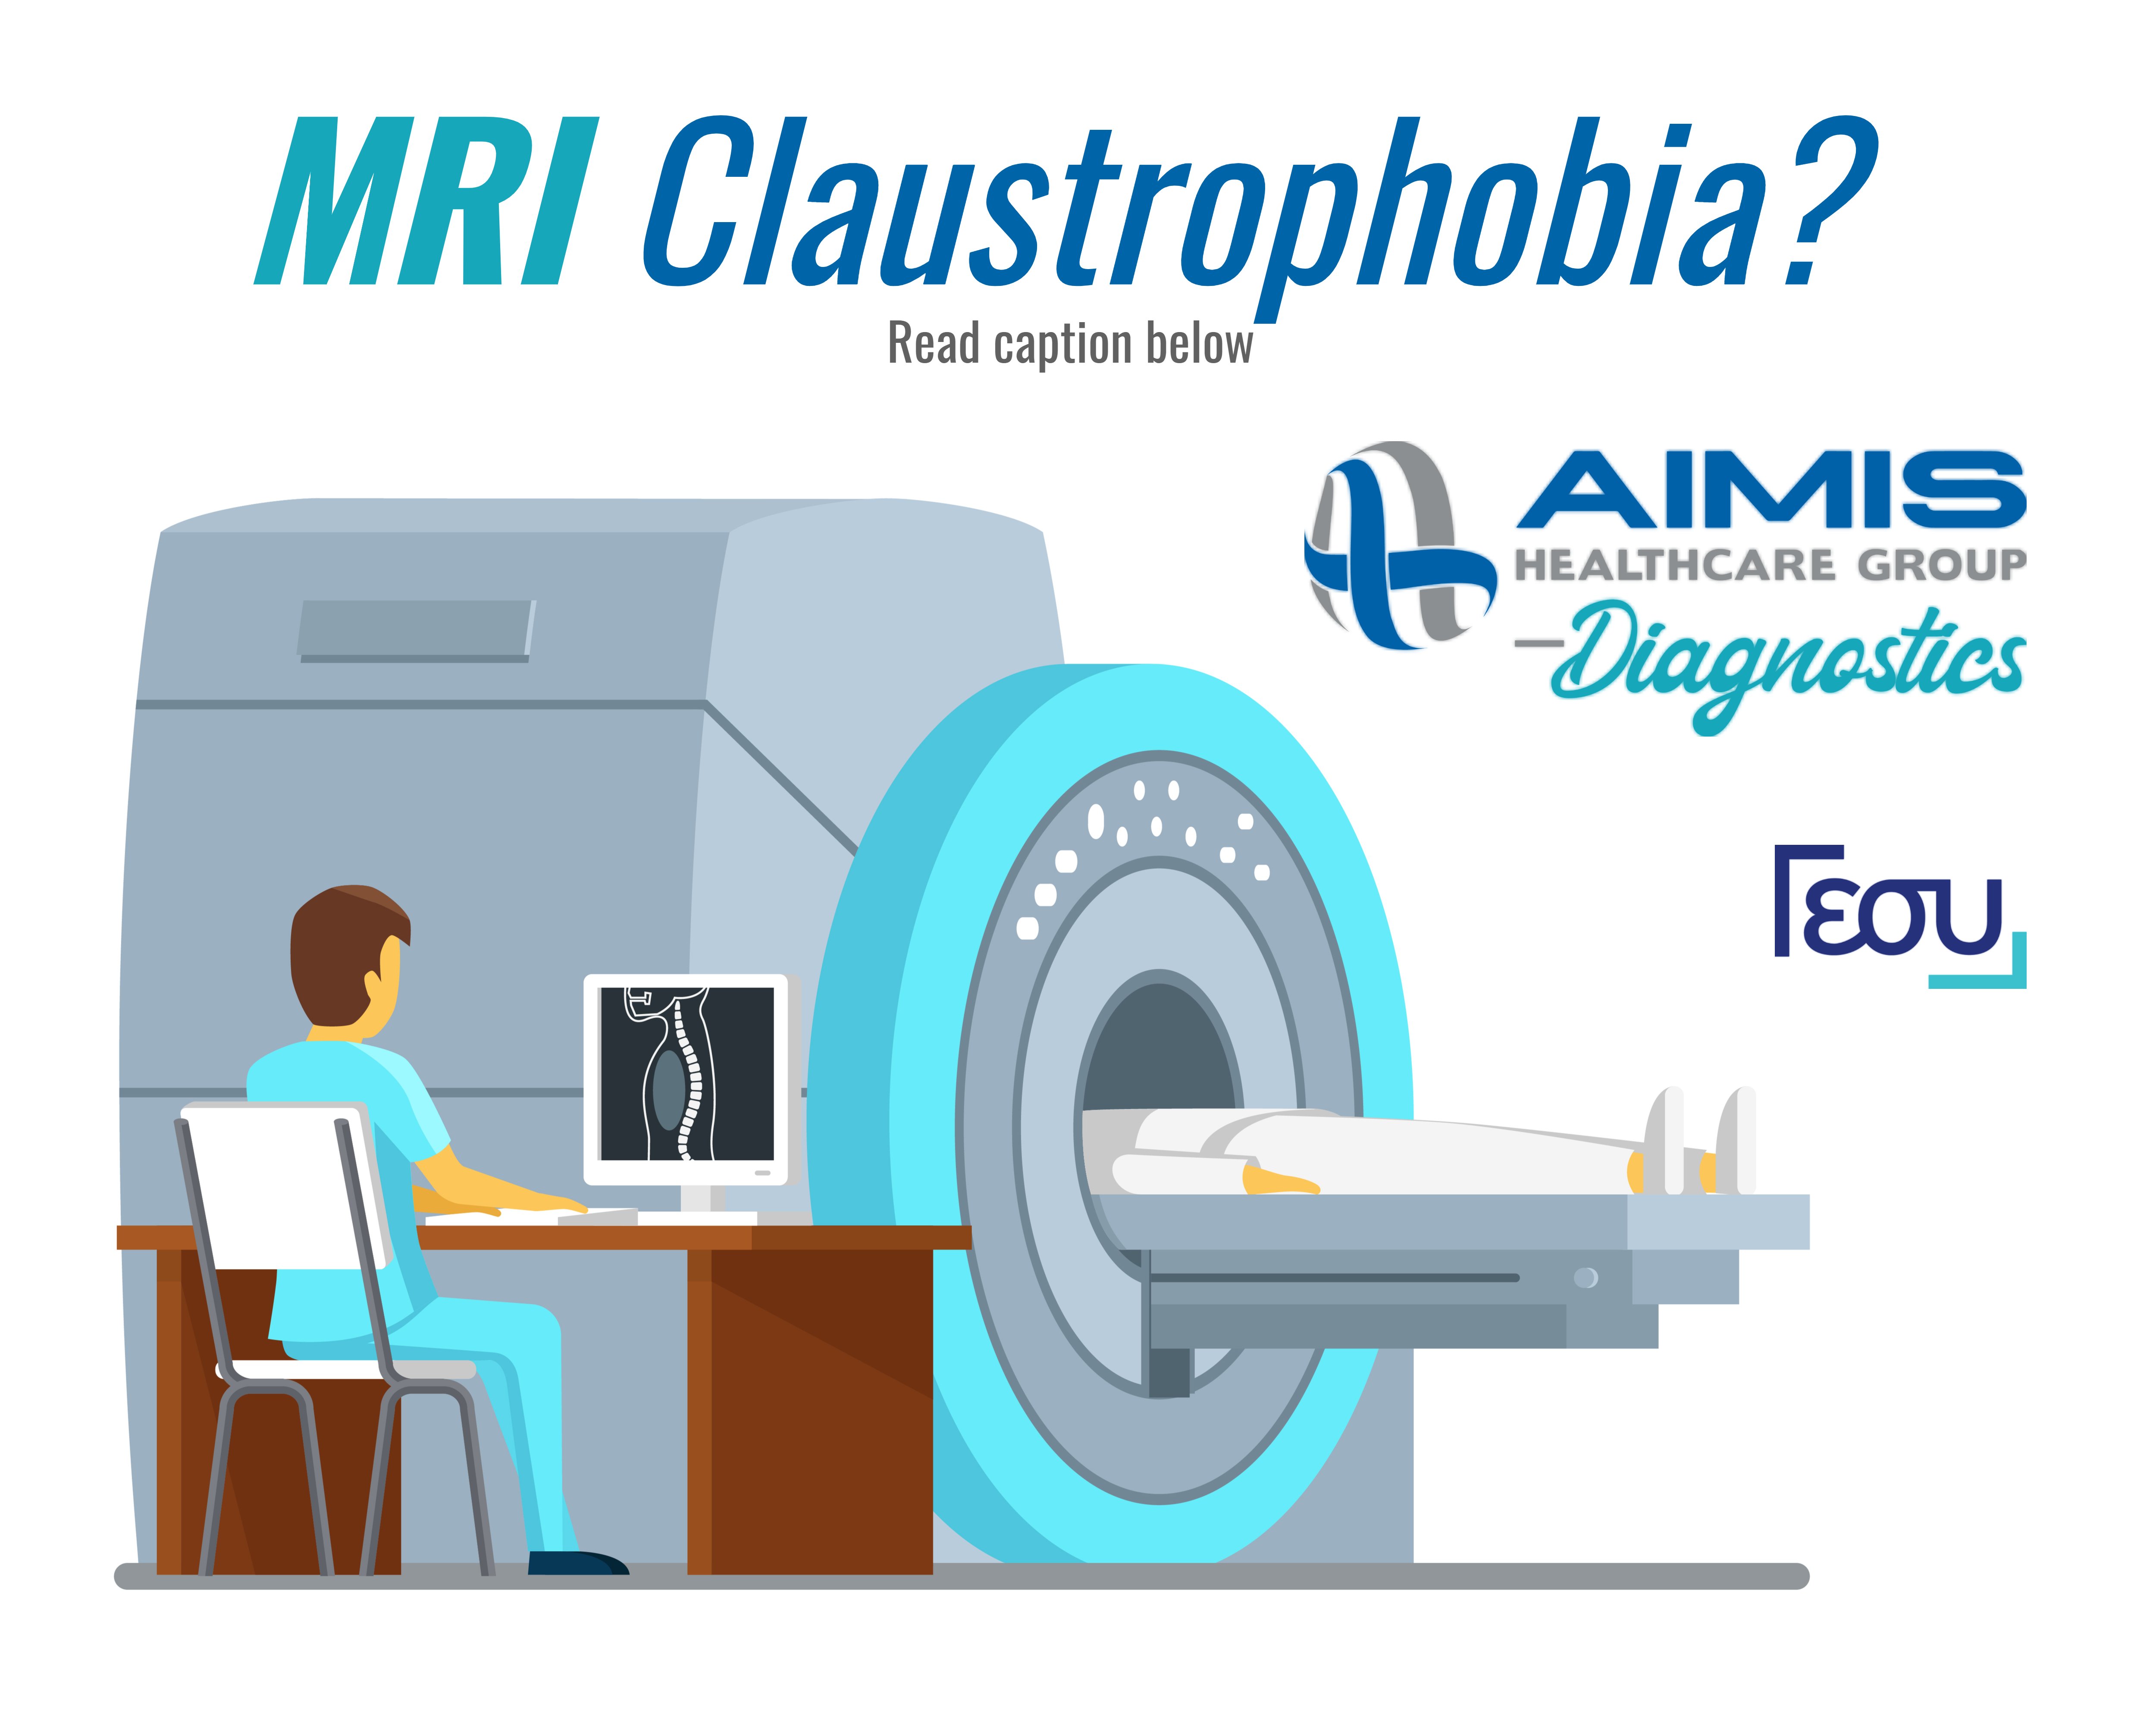 MRI Claustrophobia?